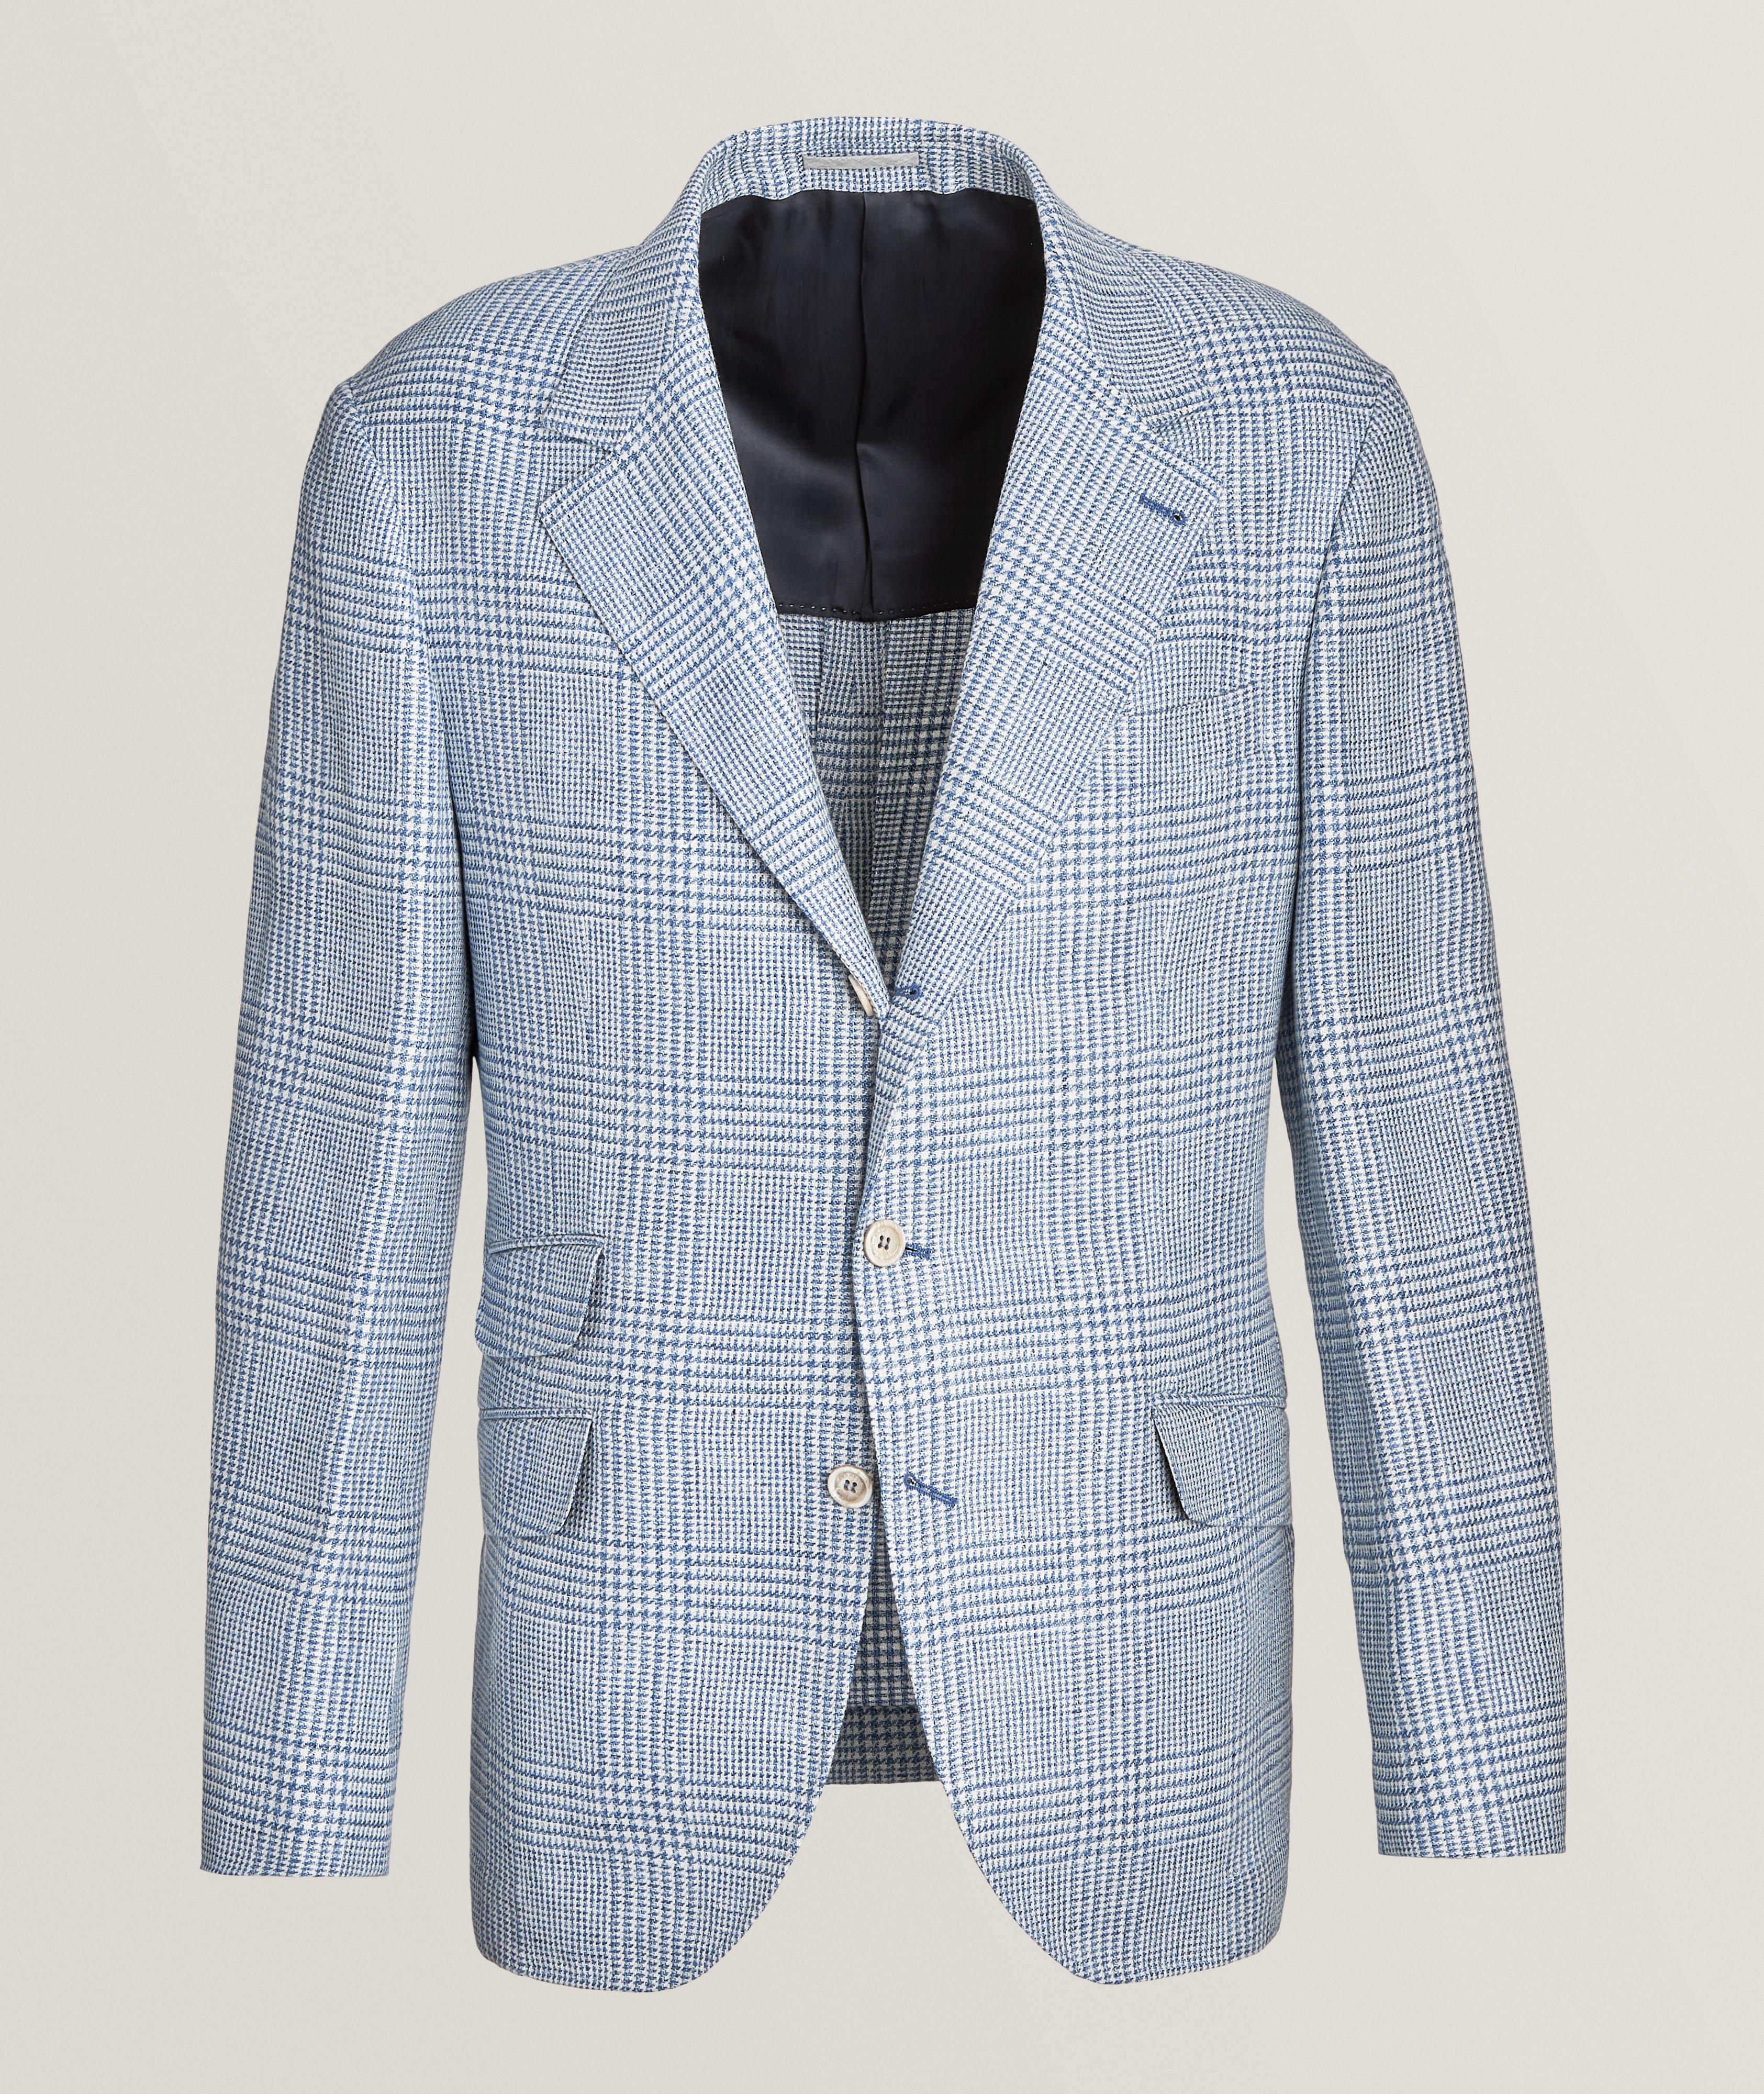 Glen Check Cavallo Linen, Wool & Silk Sport Jacket image 0